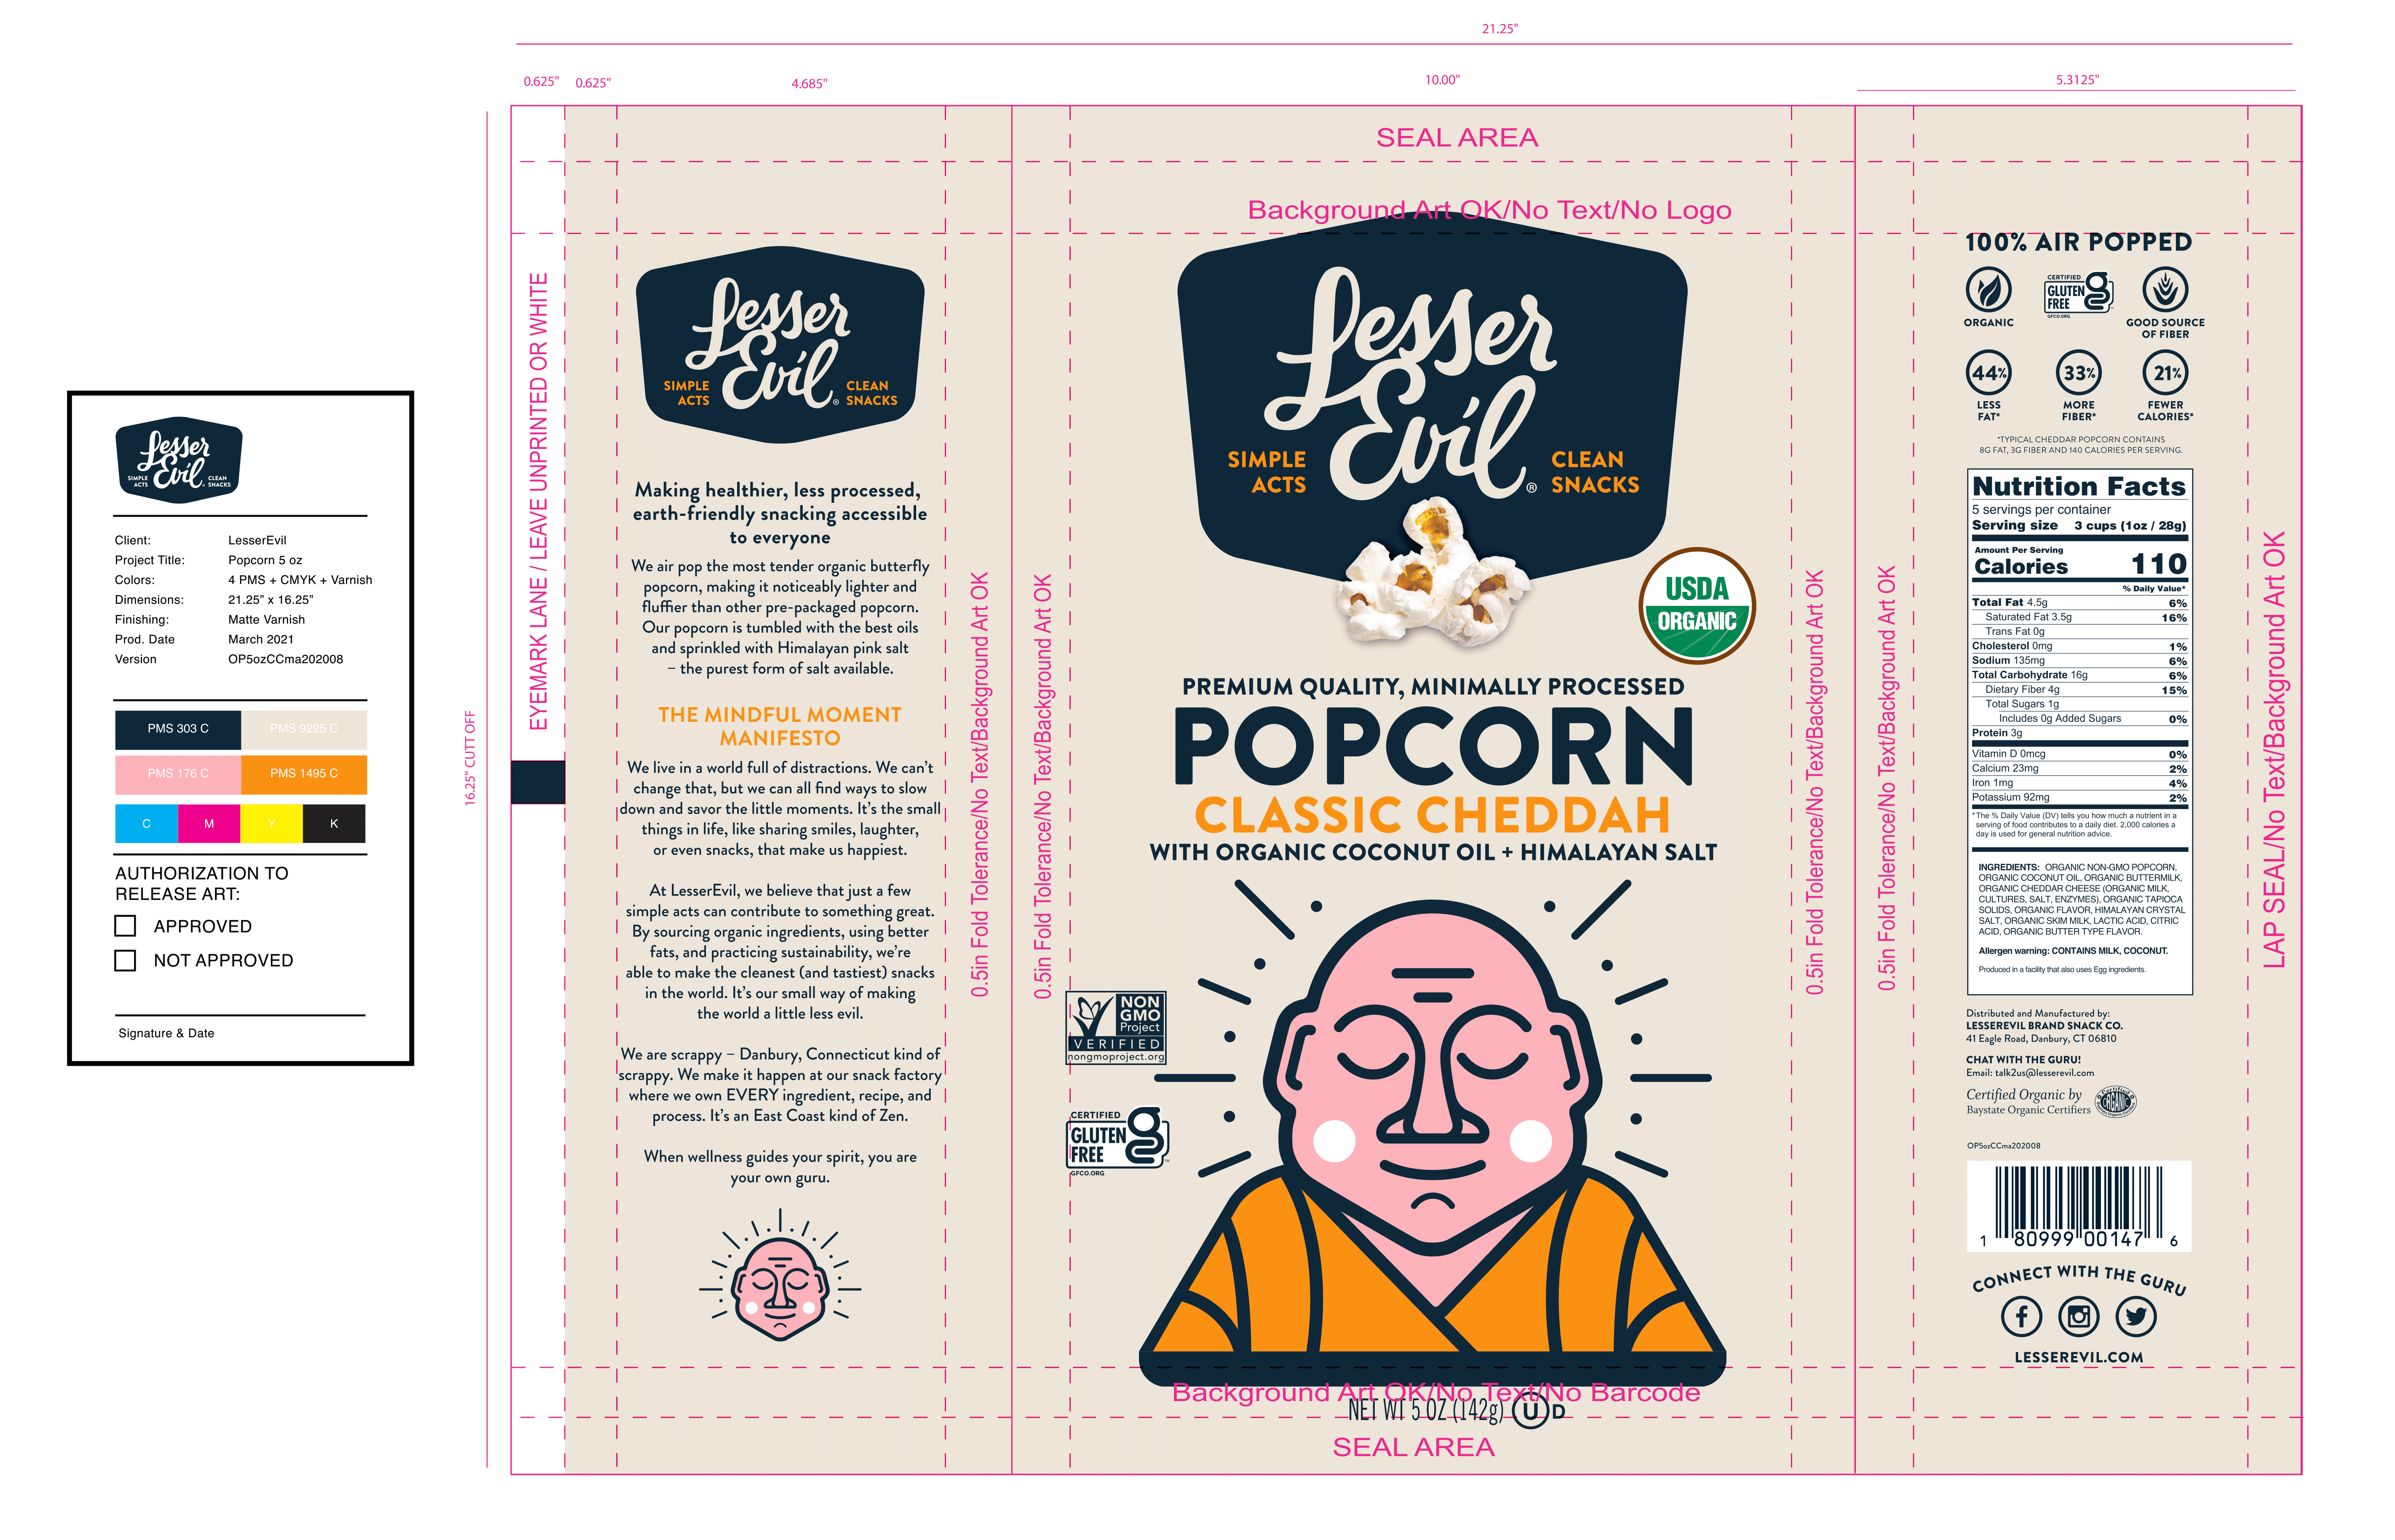 LesserEvil, Organic Popcorn Classic Cheddah 12 units per case 5.0 oz Product Label